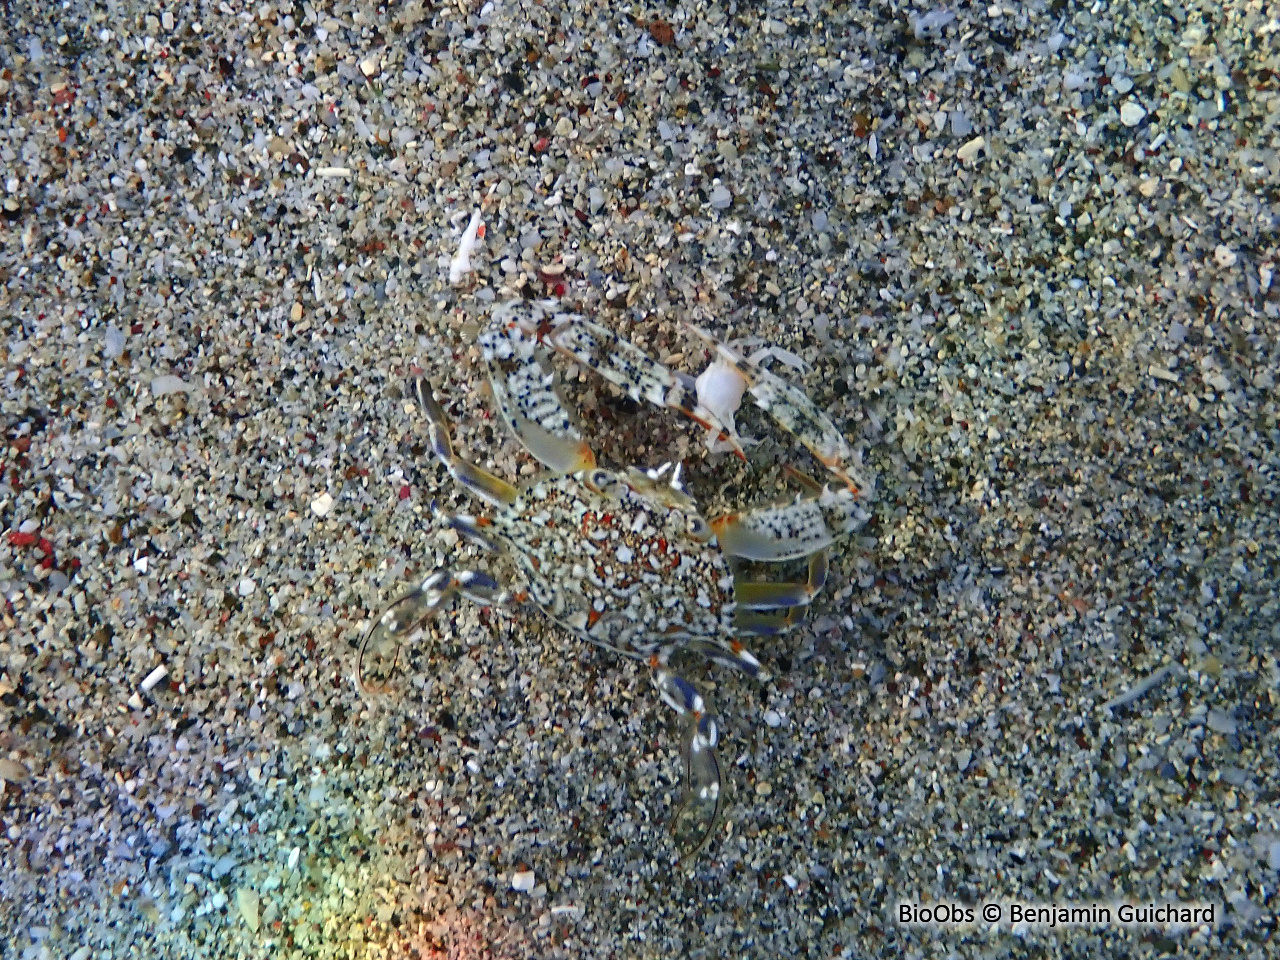 Crabe nageur délicat - Portunus anceps - Benjamin Guichard - BioObs